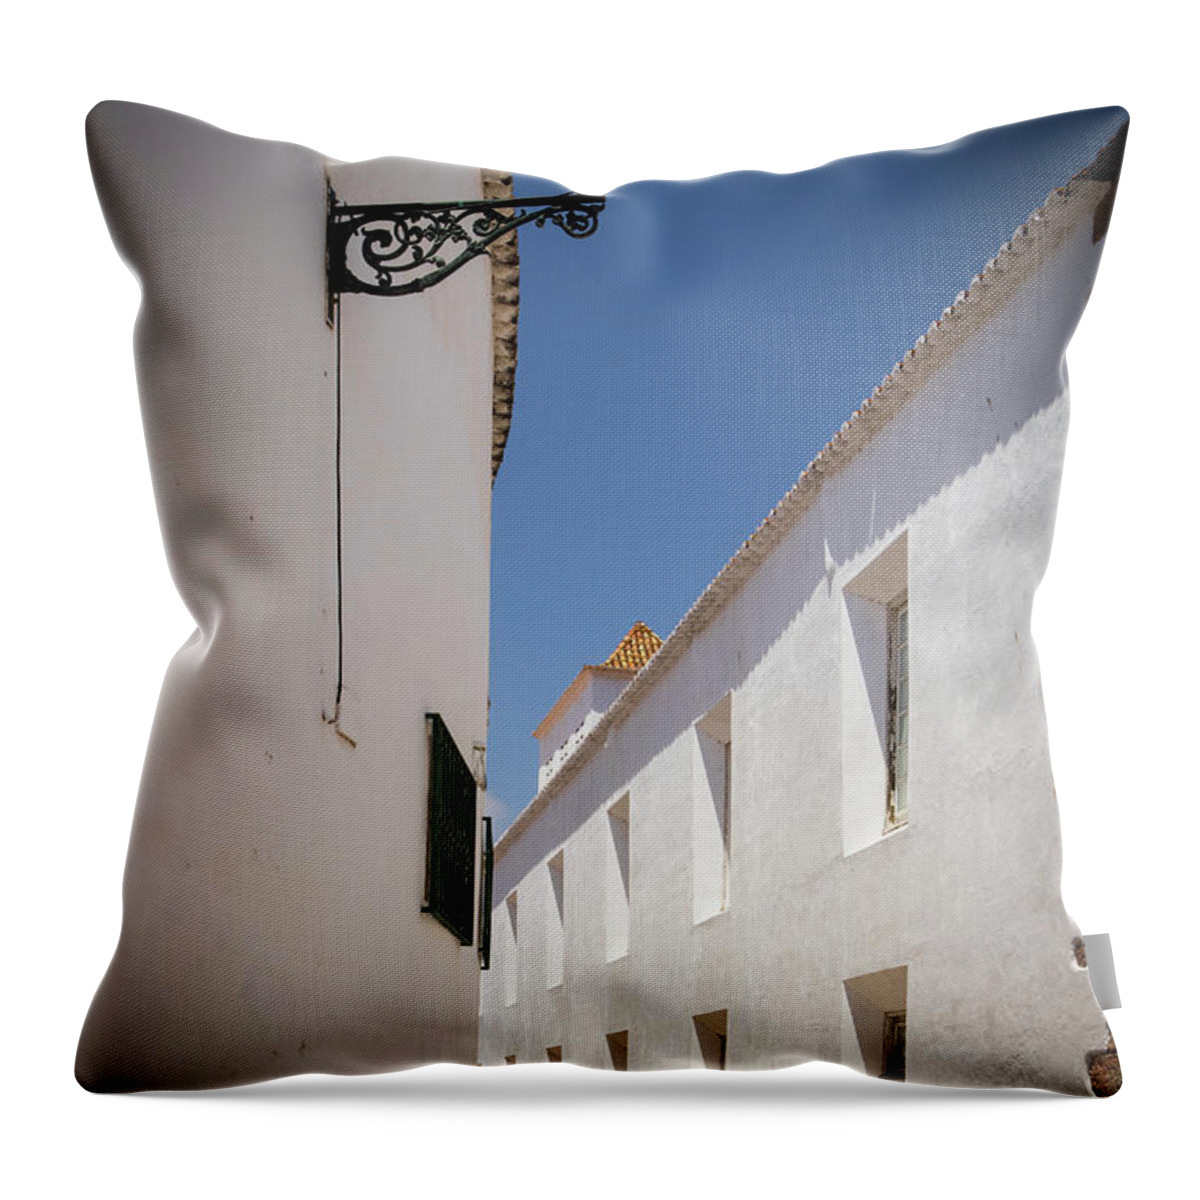 Rua Do Castelo Throw Pillow featuring the photograph Rua do Castelo by Nigel R Bell